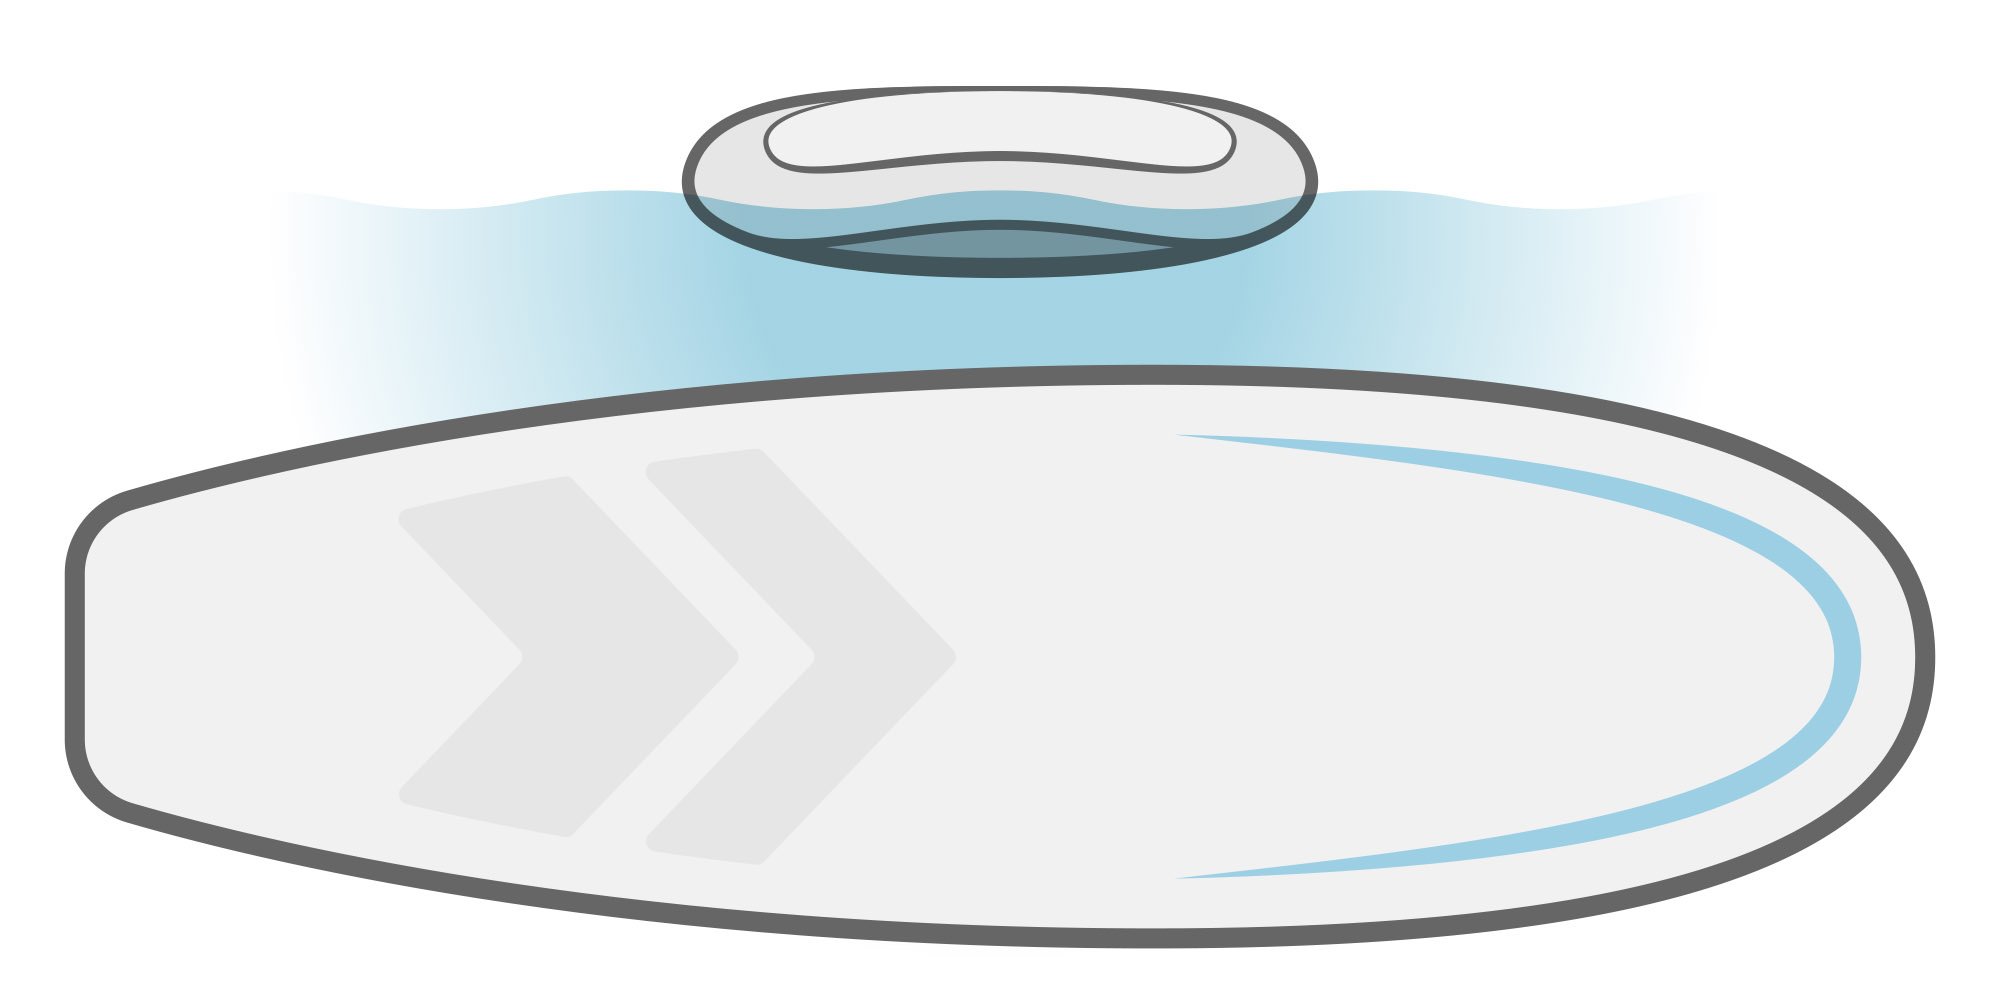 Ilustracija SUP paddleboarda s oblim trupom.